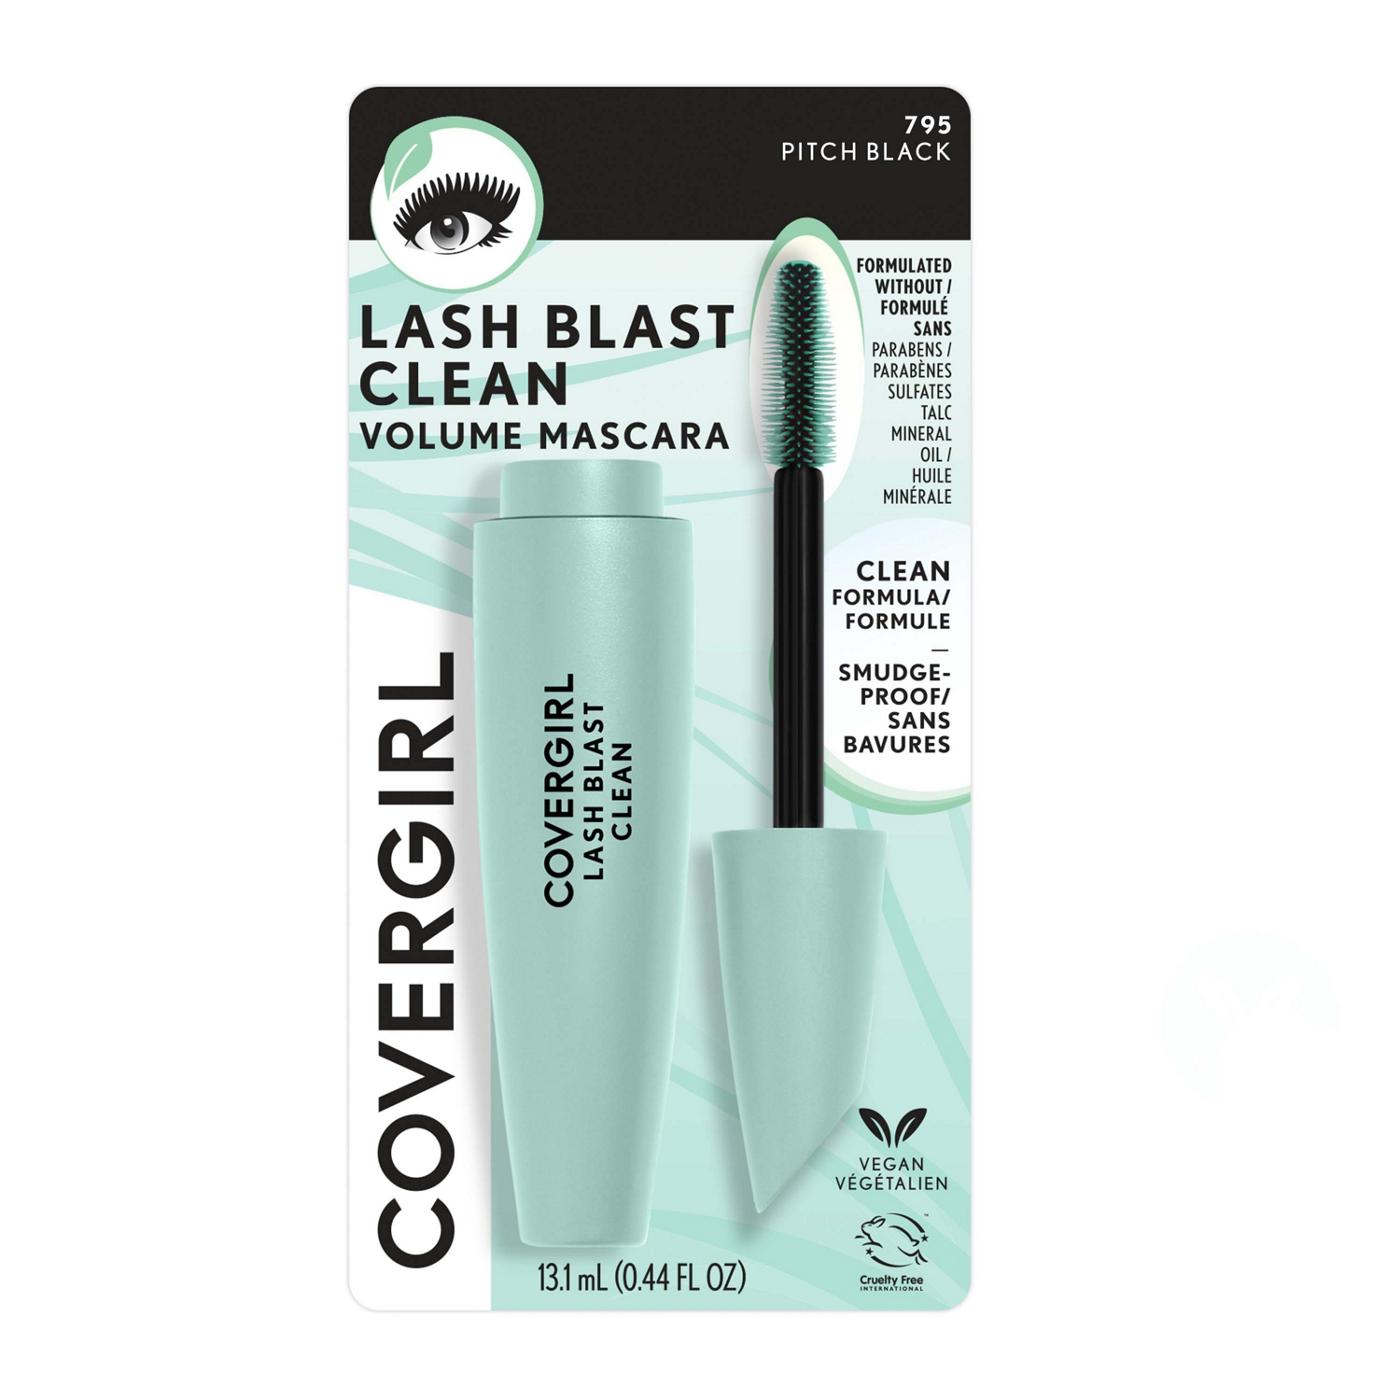 Covergirl Lash Blast Clean Mascara 795 Pitch Black; image 1 of 11